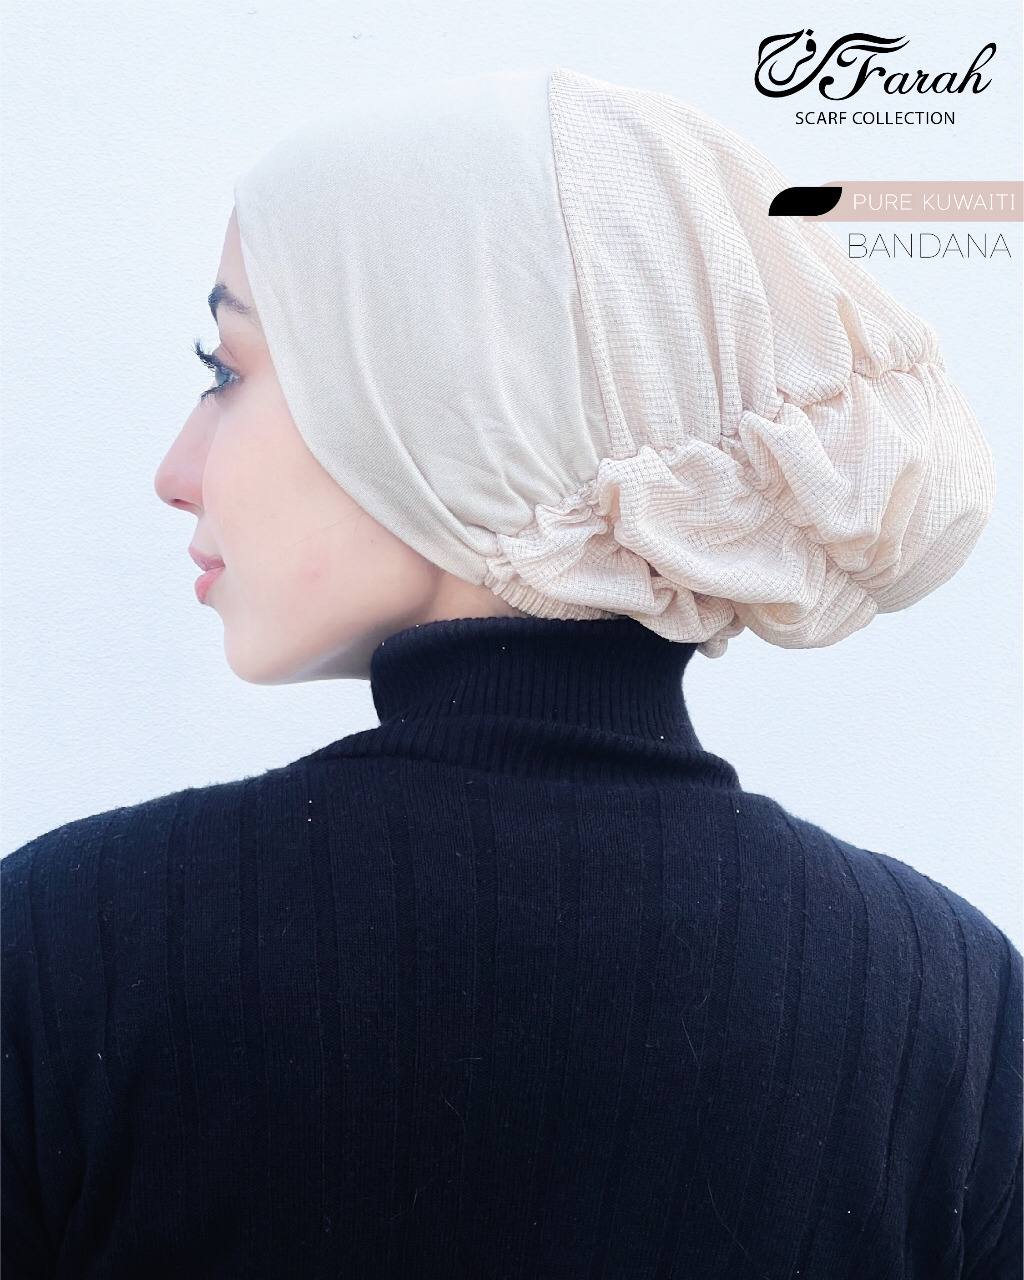 Elegant Cotton Hijab Frill Kuwaiti Bandana with Ruffles - Stylish Headscarf for Everyday Chic - Off White